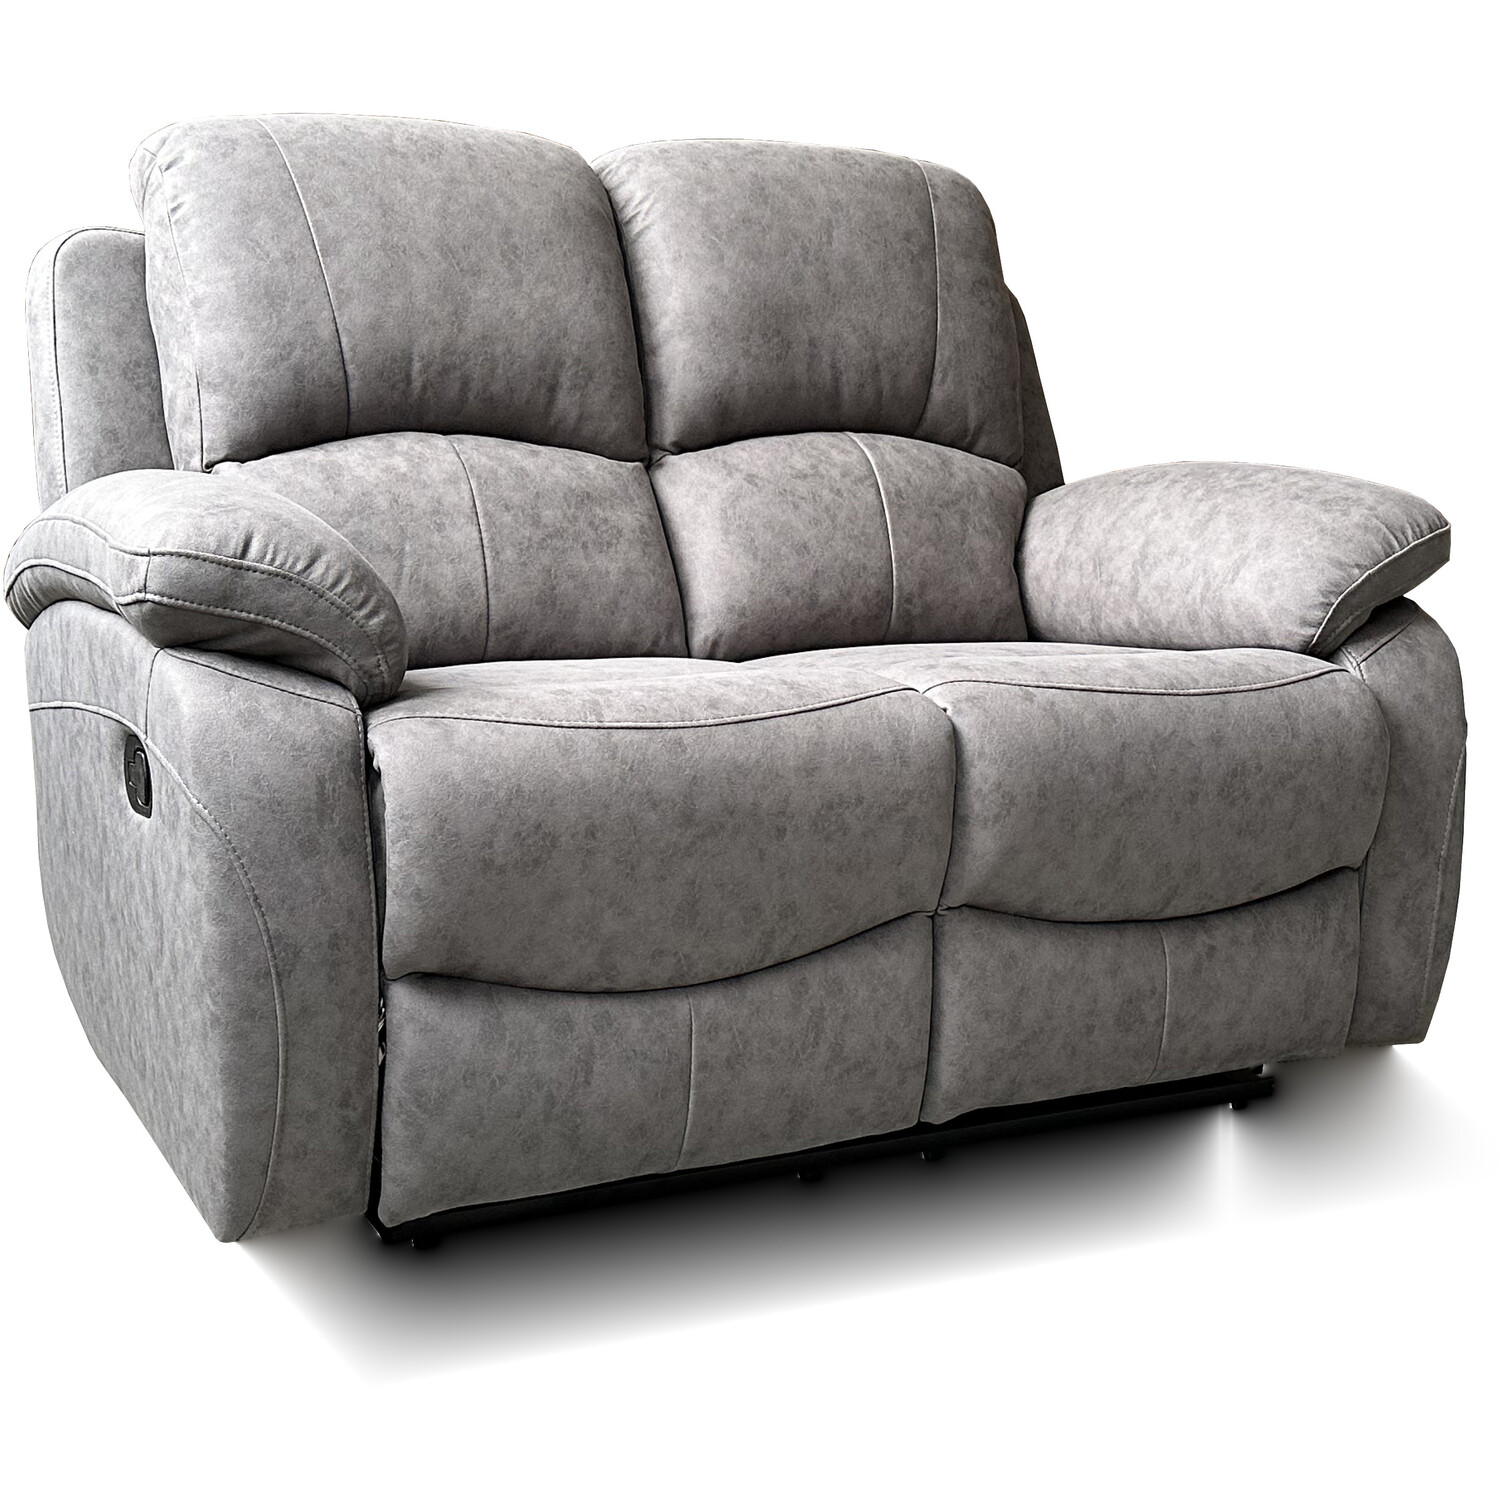 Milano 2 Seater Charcoal Fabric Manual Recliner Sofa Image 2